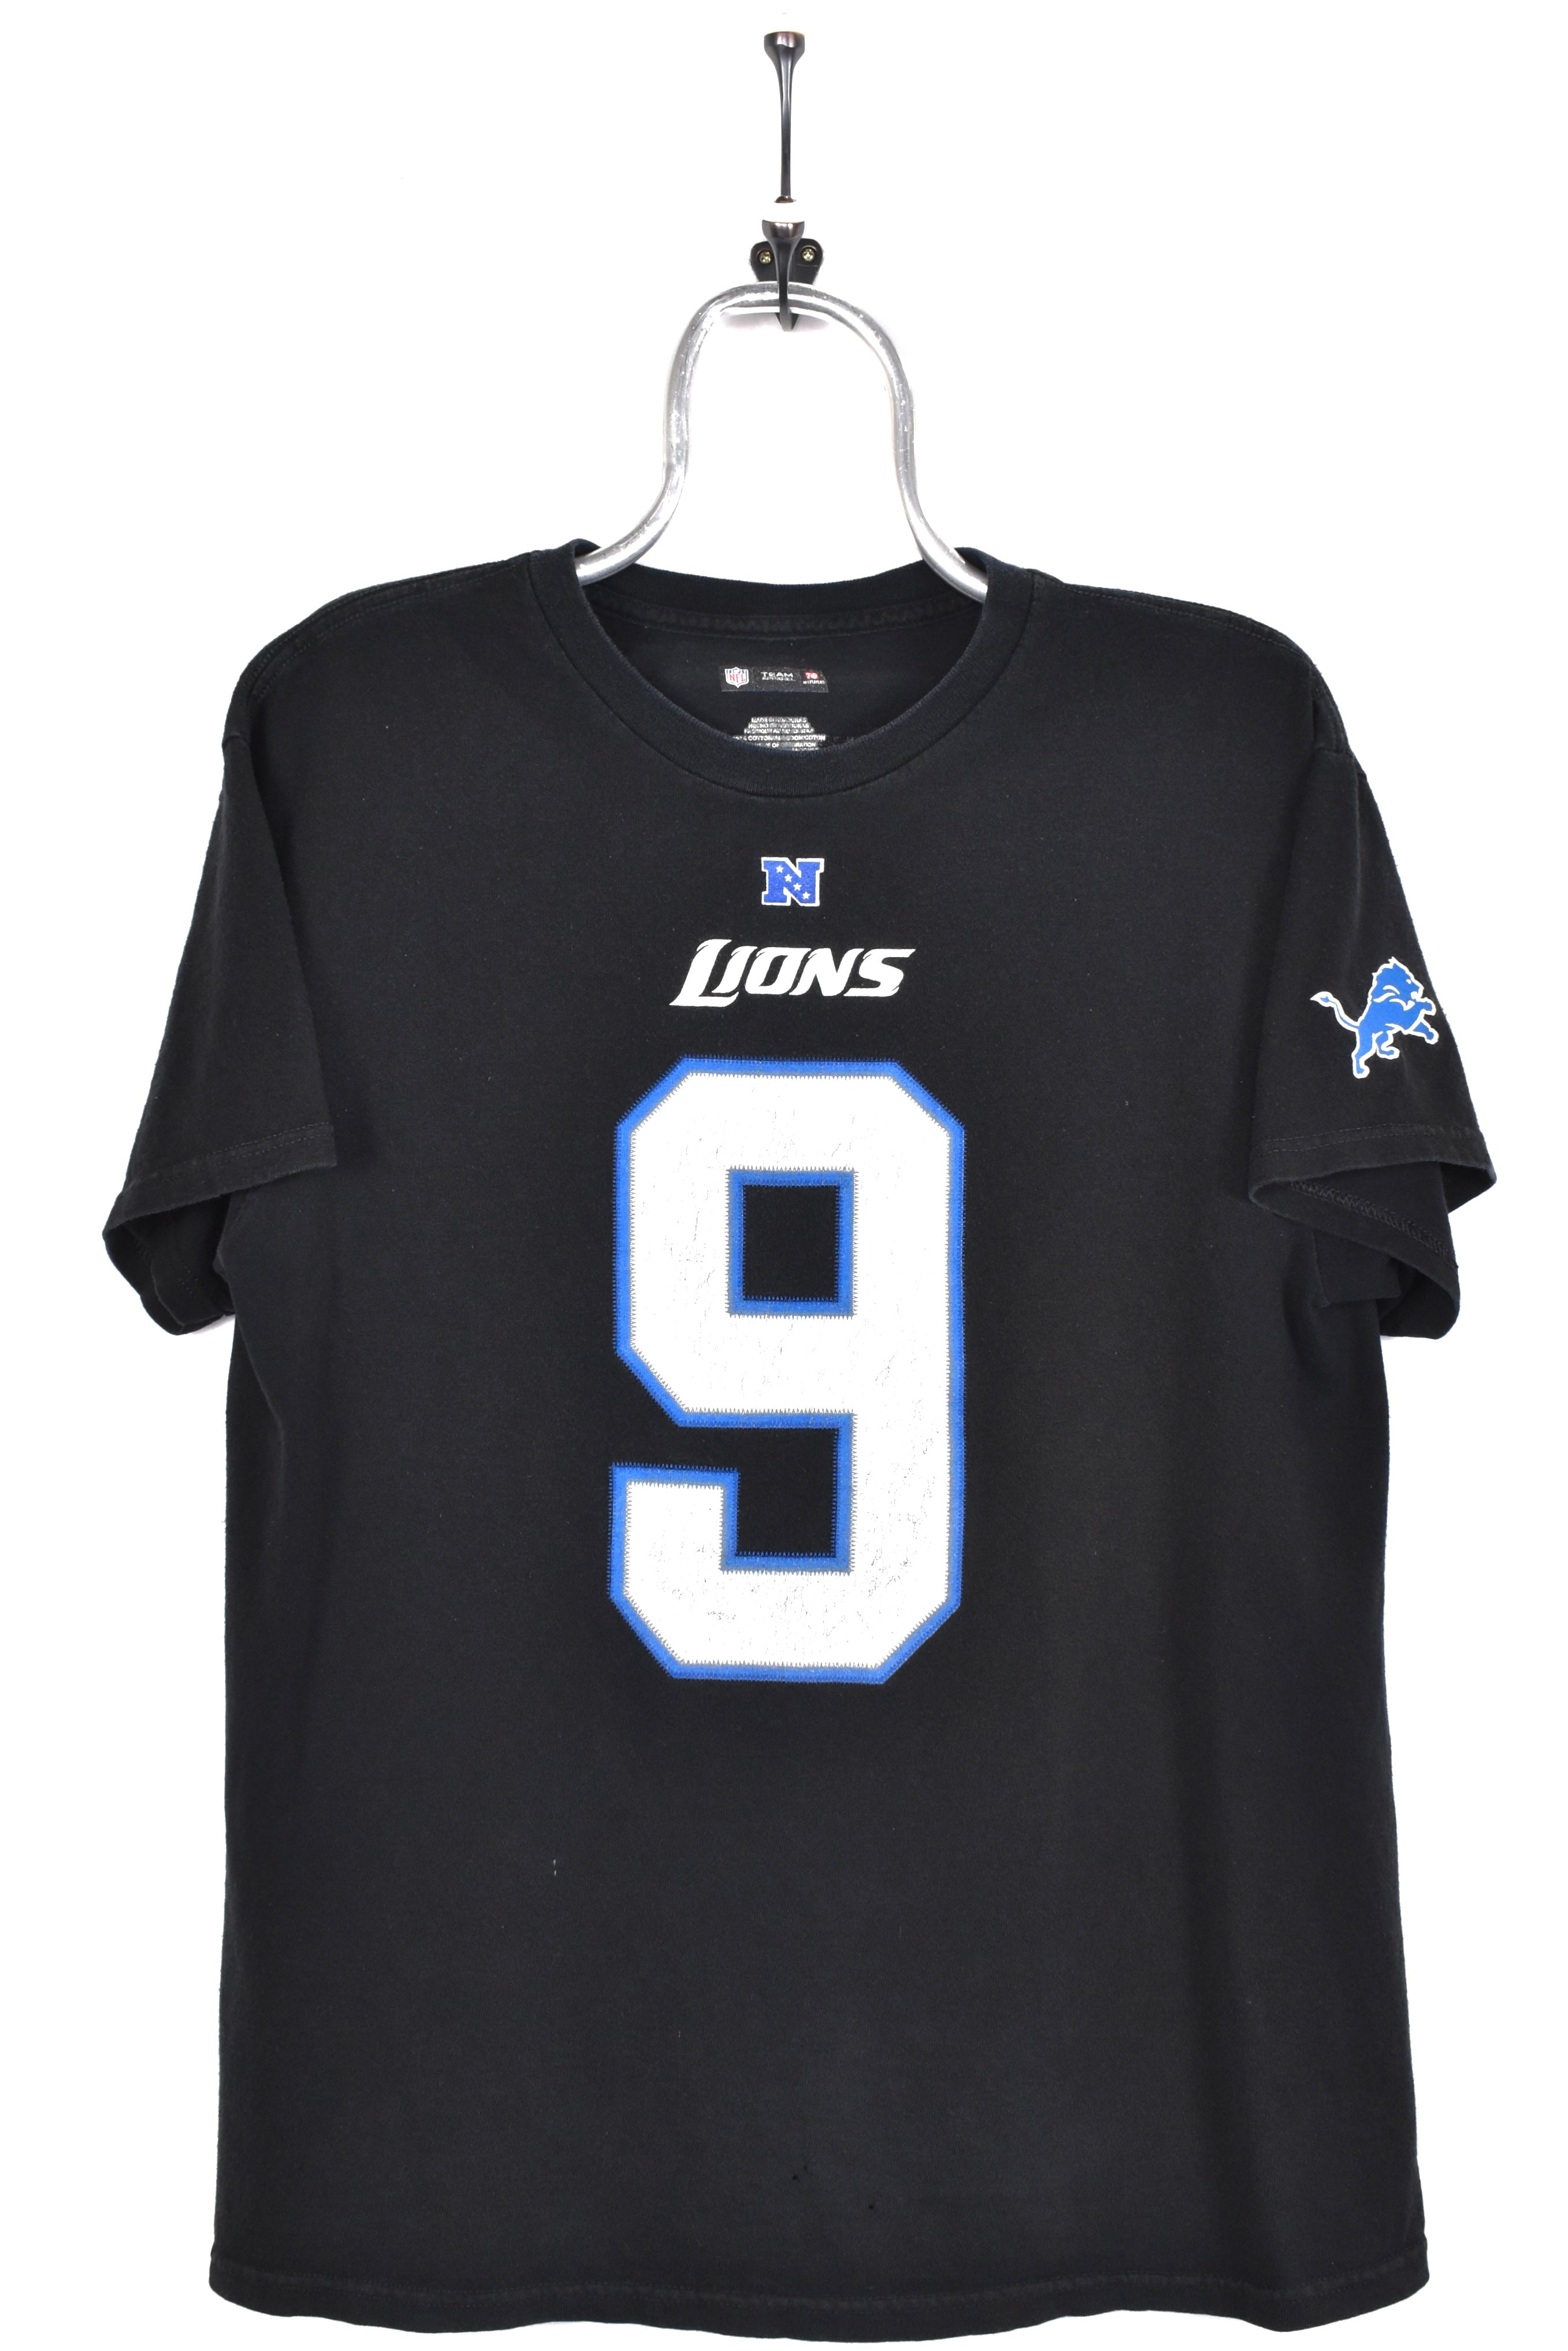 Vintage Detroit Lions shirt, NFL Stafford black graphic tee - AU Medium PRO SPORT